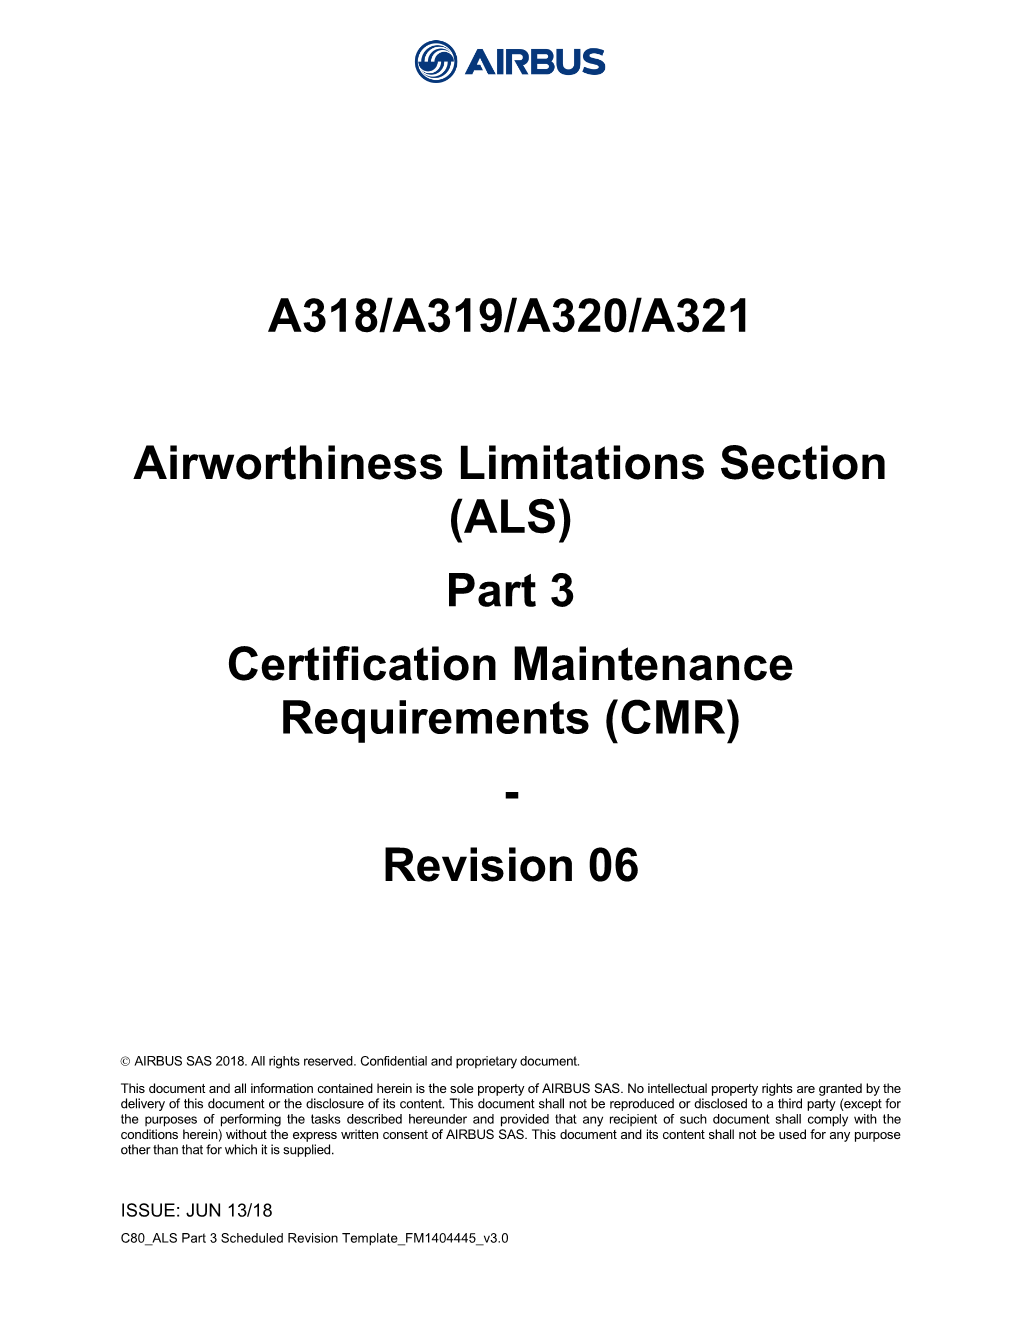 A320 Family ALS Part 3 Revision 06